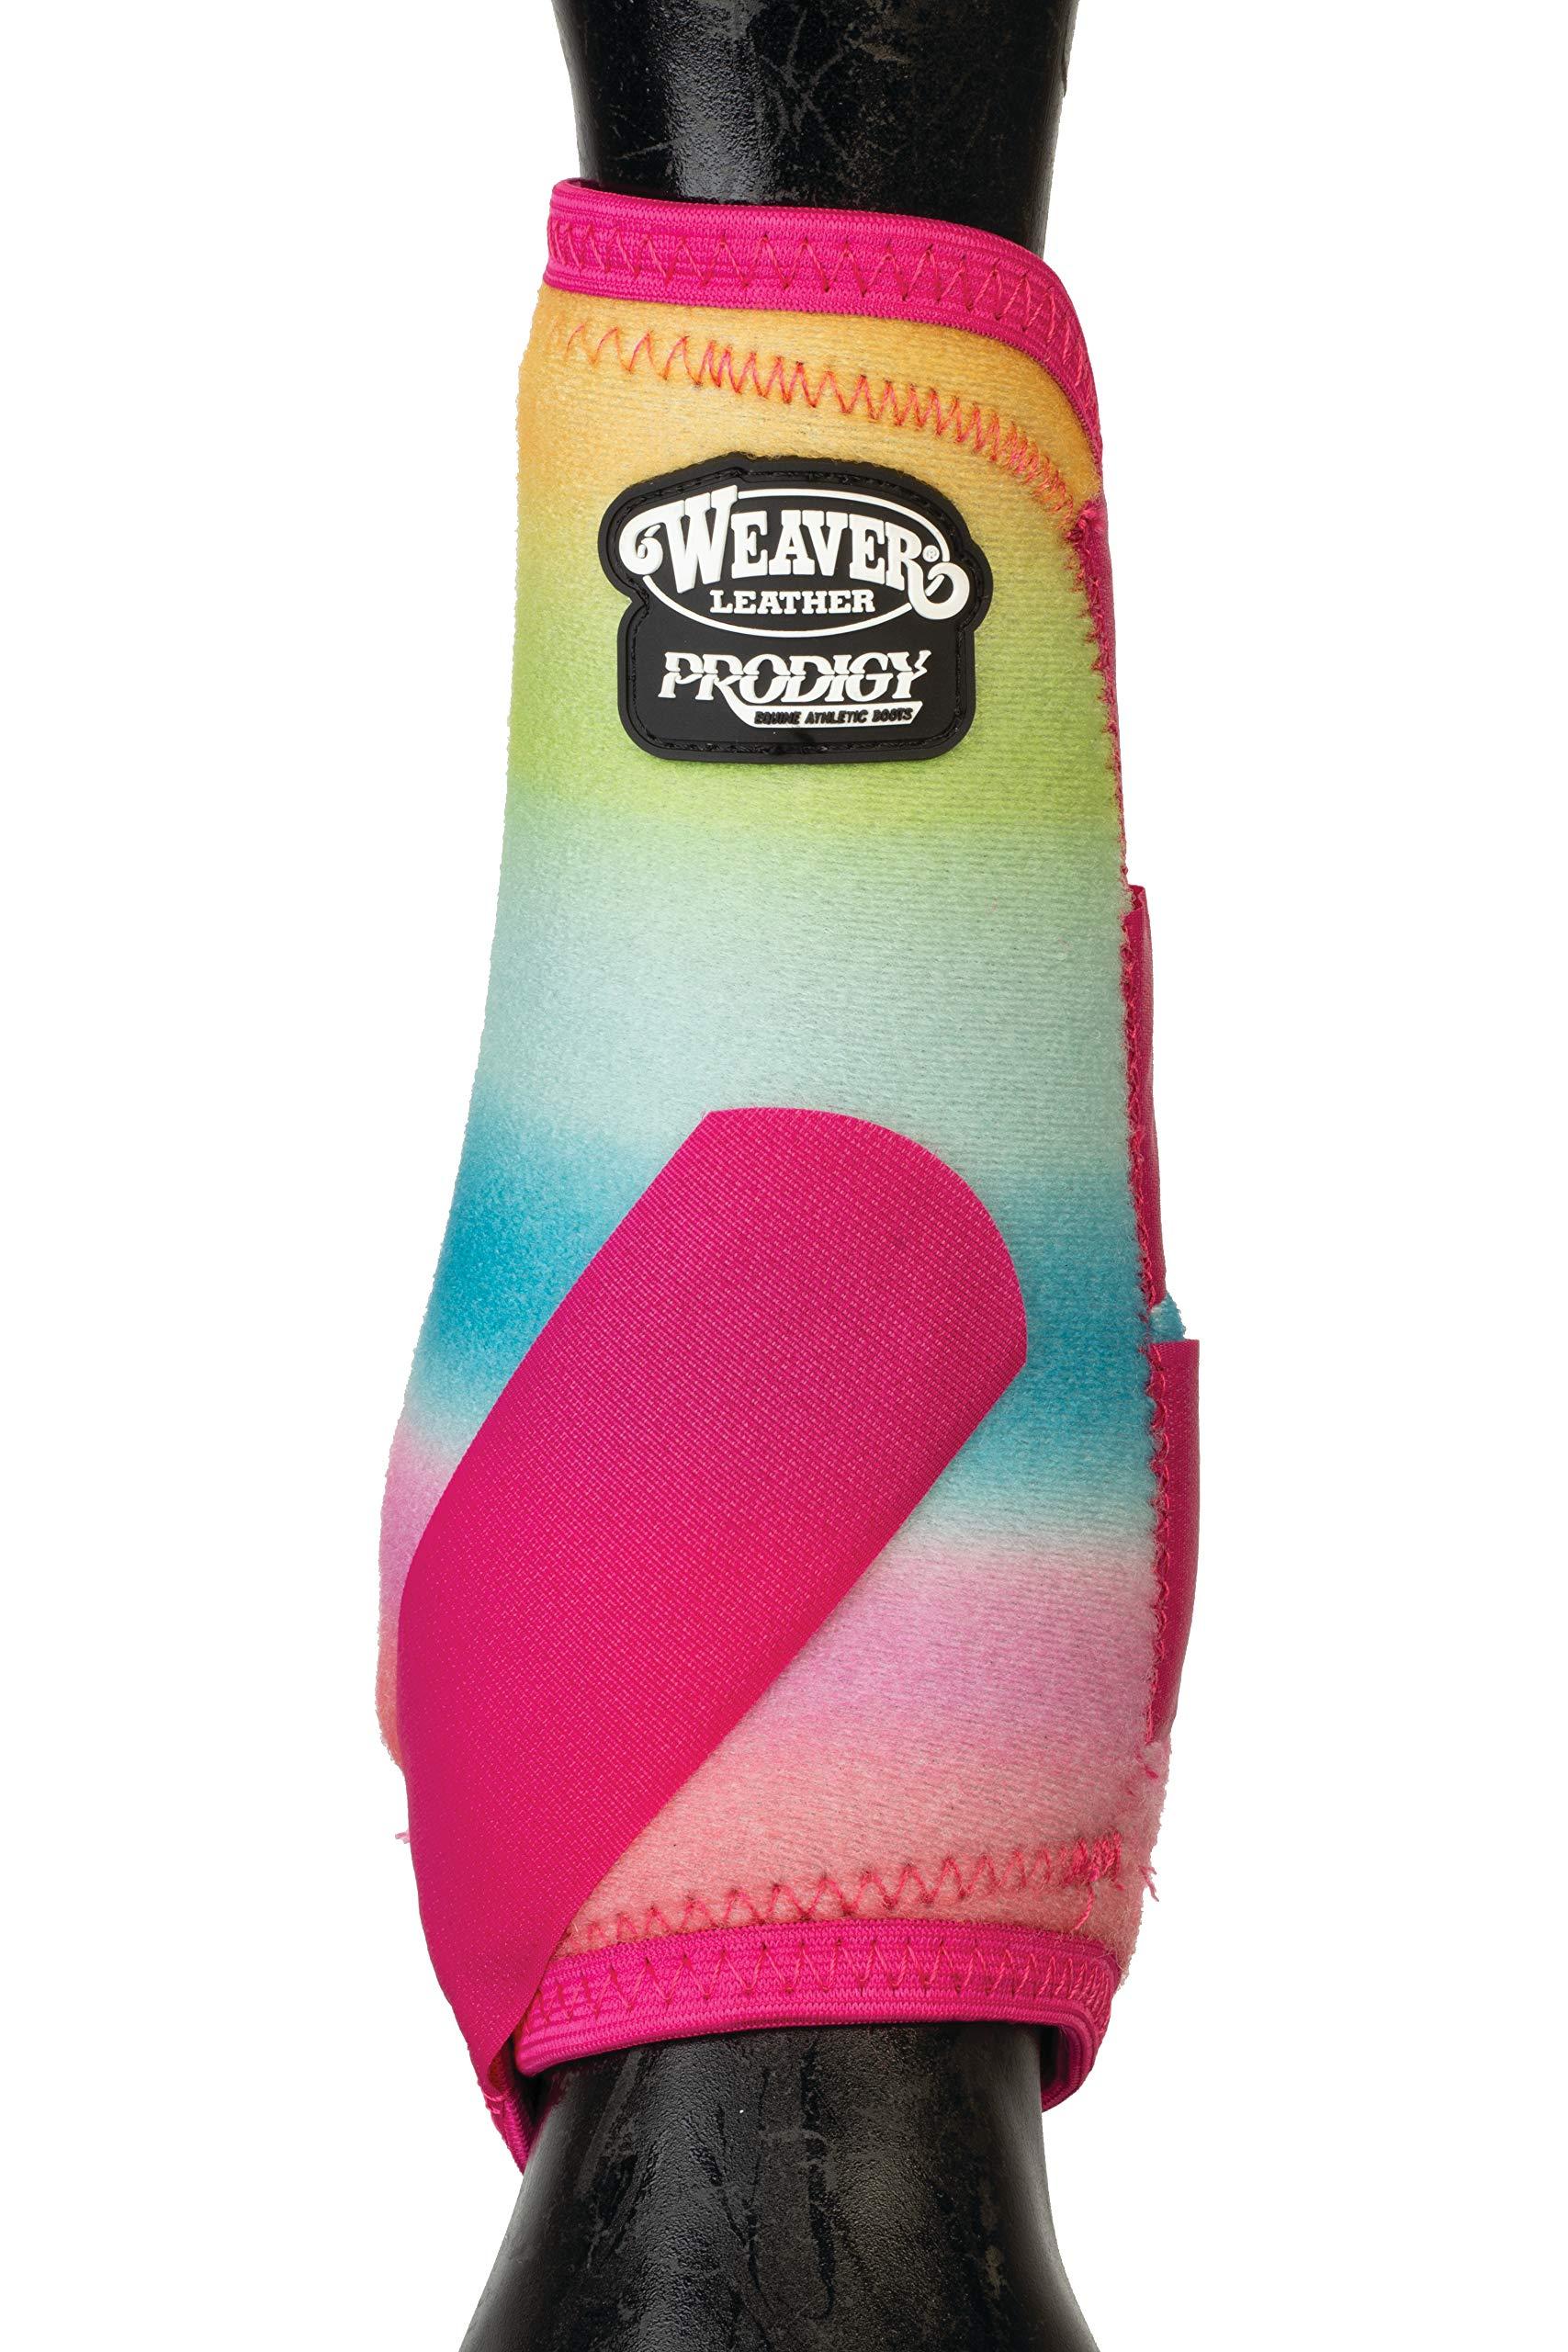 Weaver Leather Prodigy Original Athletic Boots, 4-Pack, Rainbow, Medium